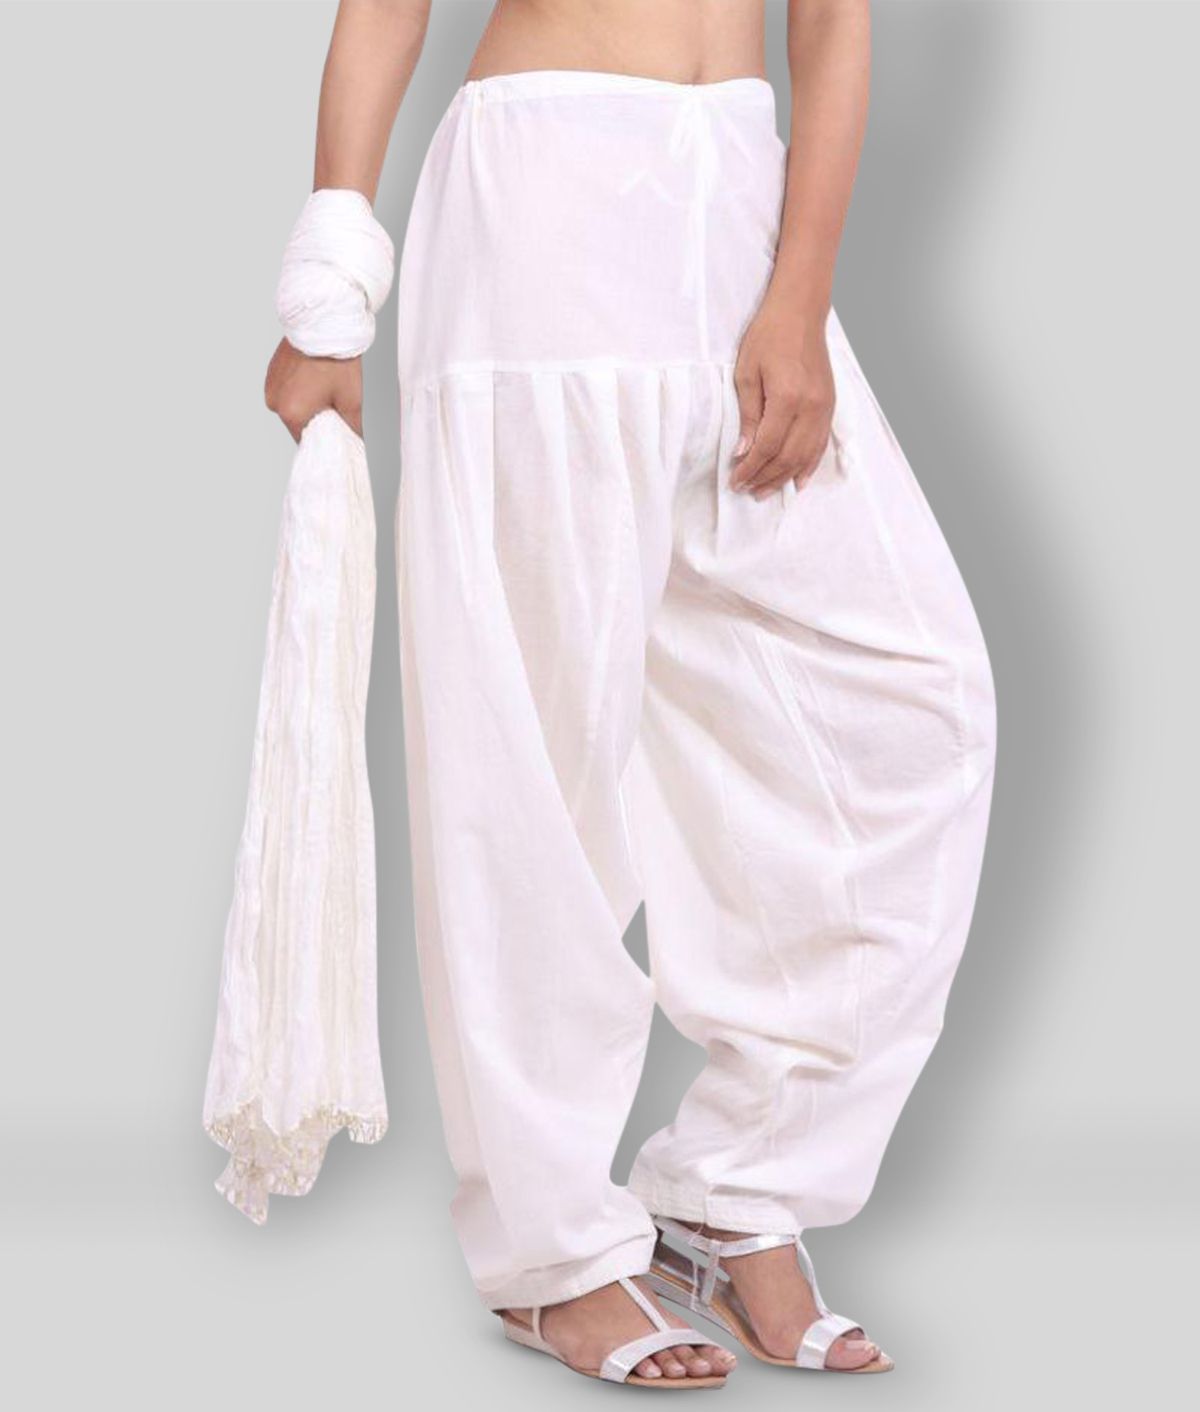 Jaipur Kurti - White Cotton Women's Patiala With Dupatta ( Pack of 1 )